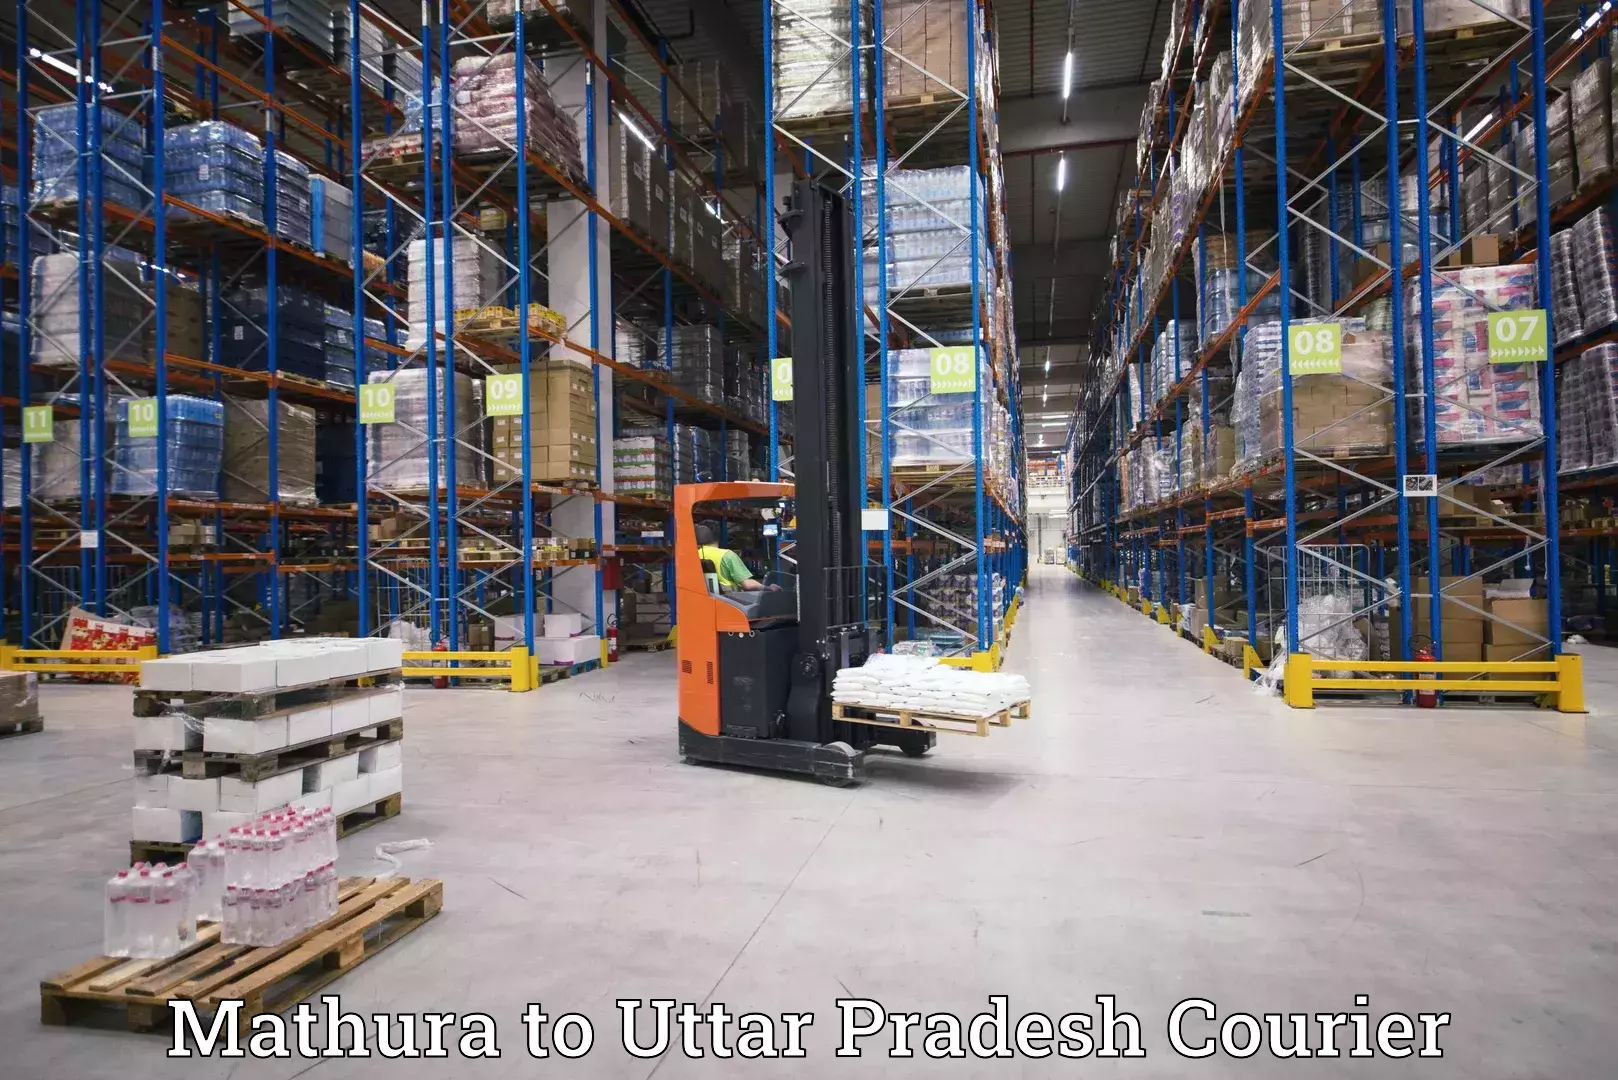 On-demand shipping options Mathura to Agra